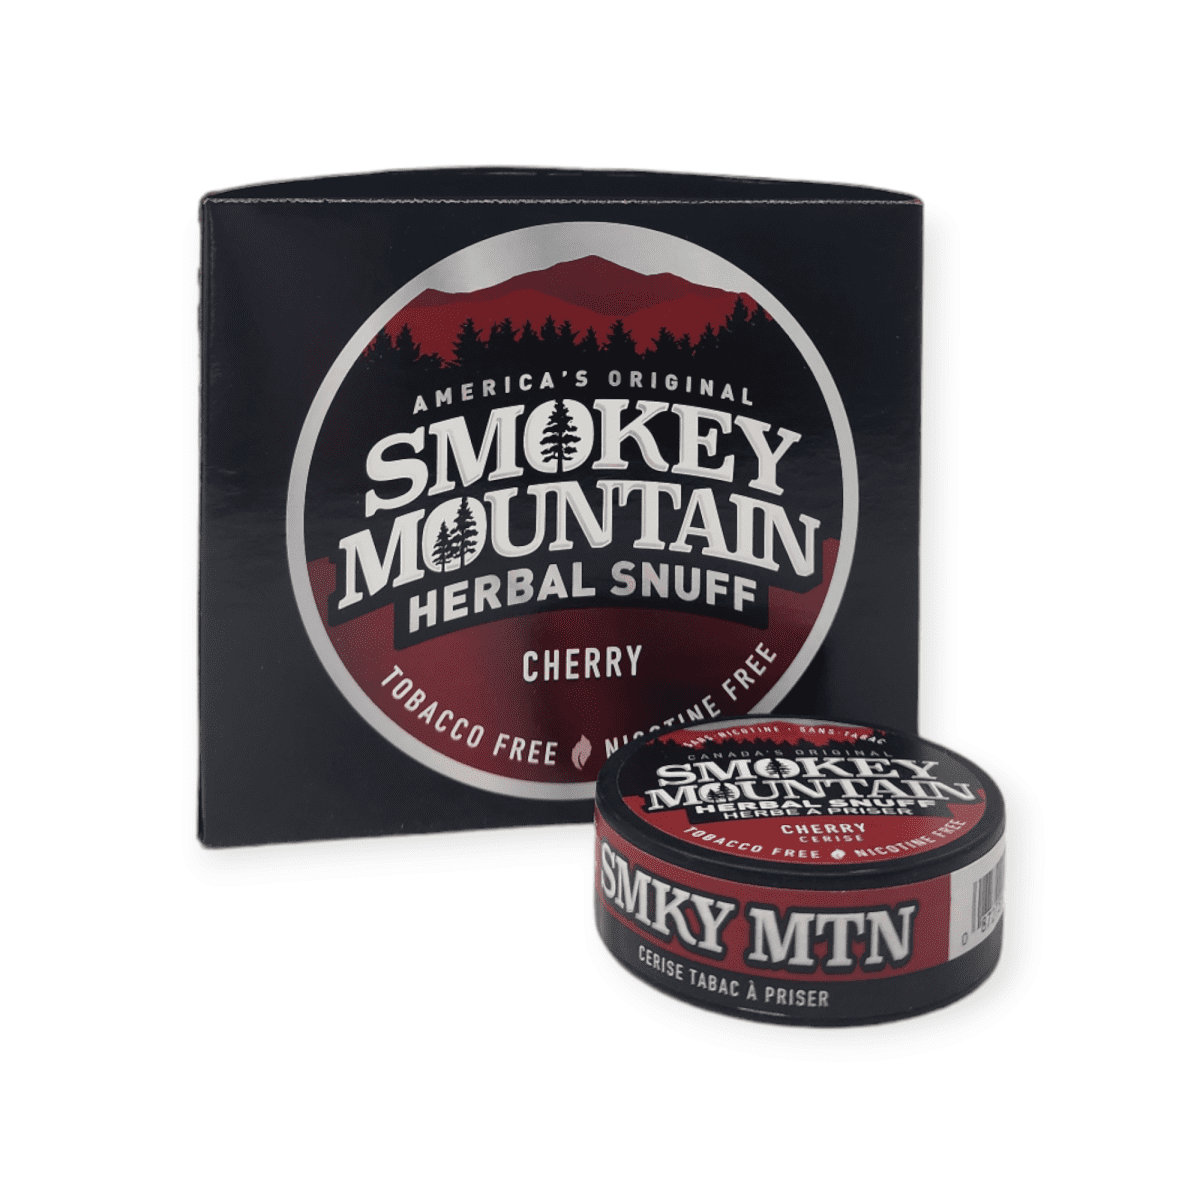 America’s Original Smokey Mountain Herbal Snuff Cherry (28g)